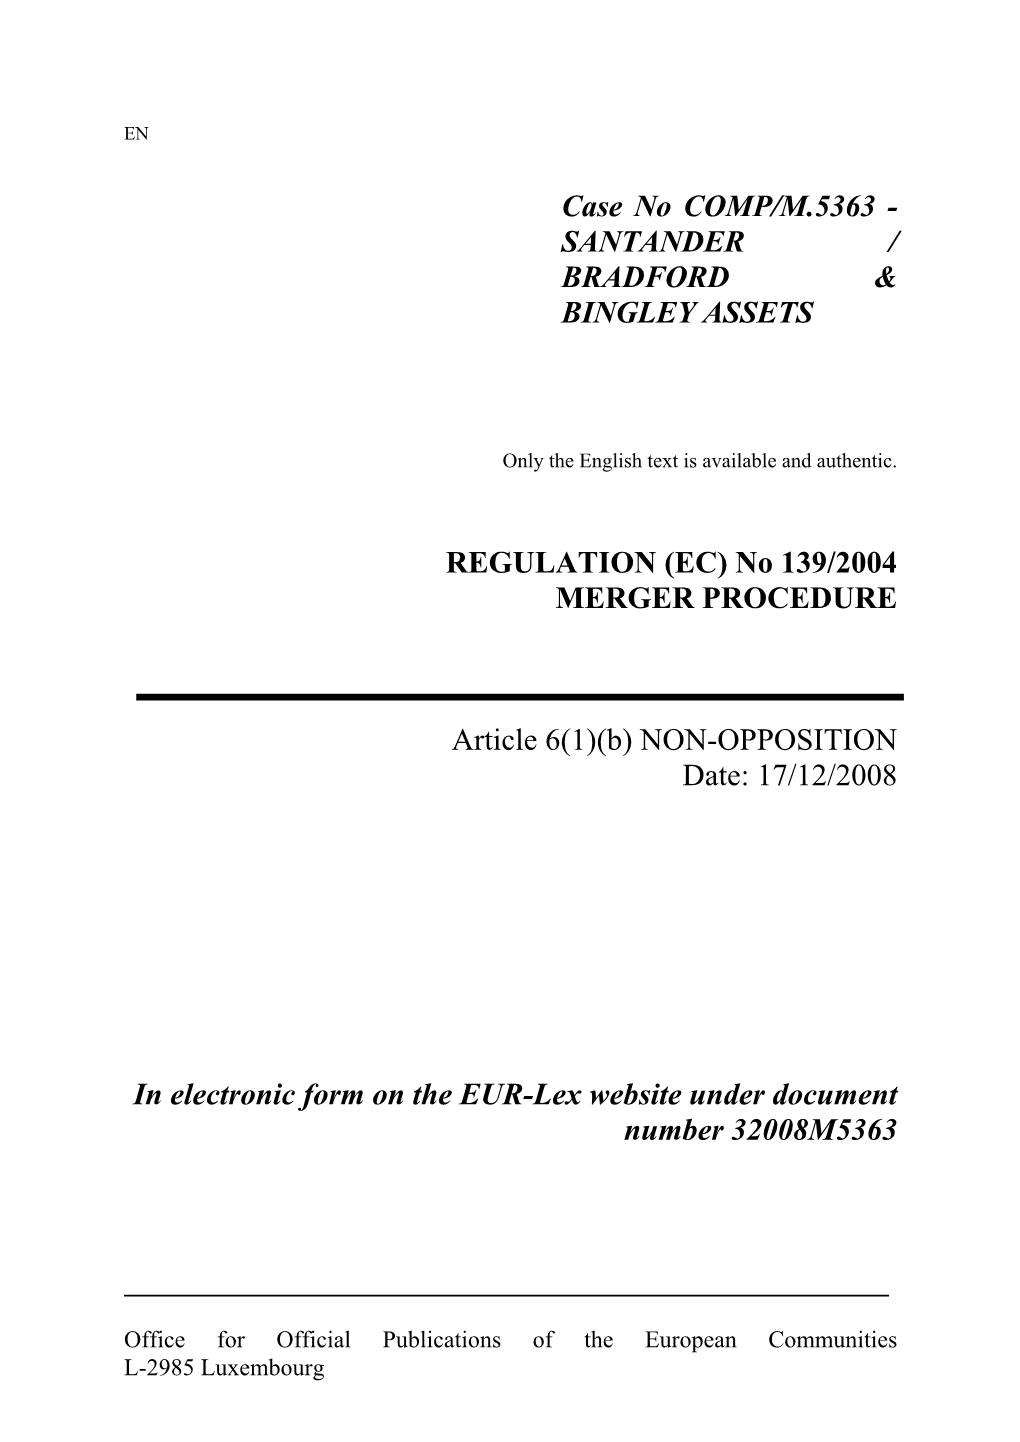 Case No COMP/M.5363 - SANTANDER / BRADFORD & BINGLEY ASSETS